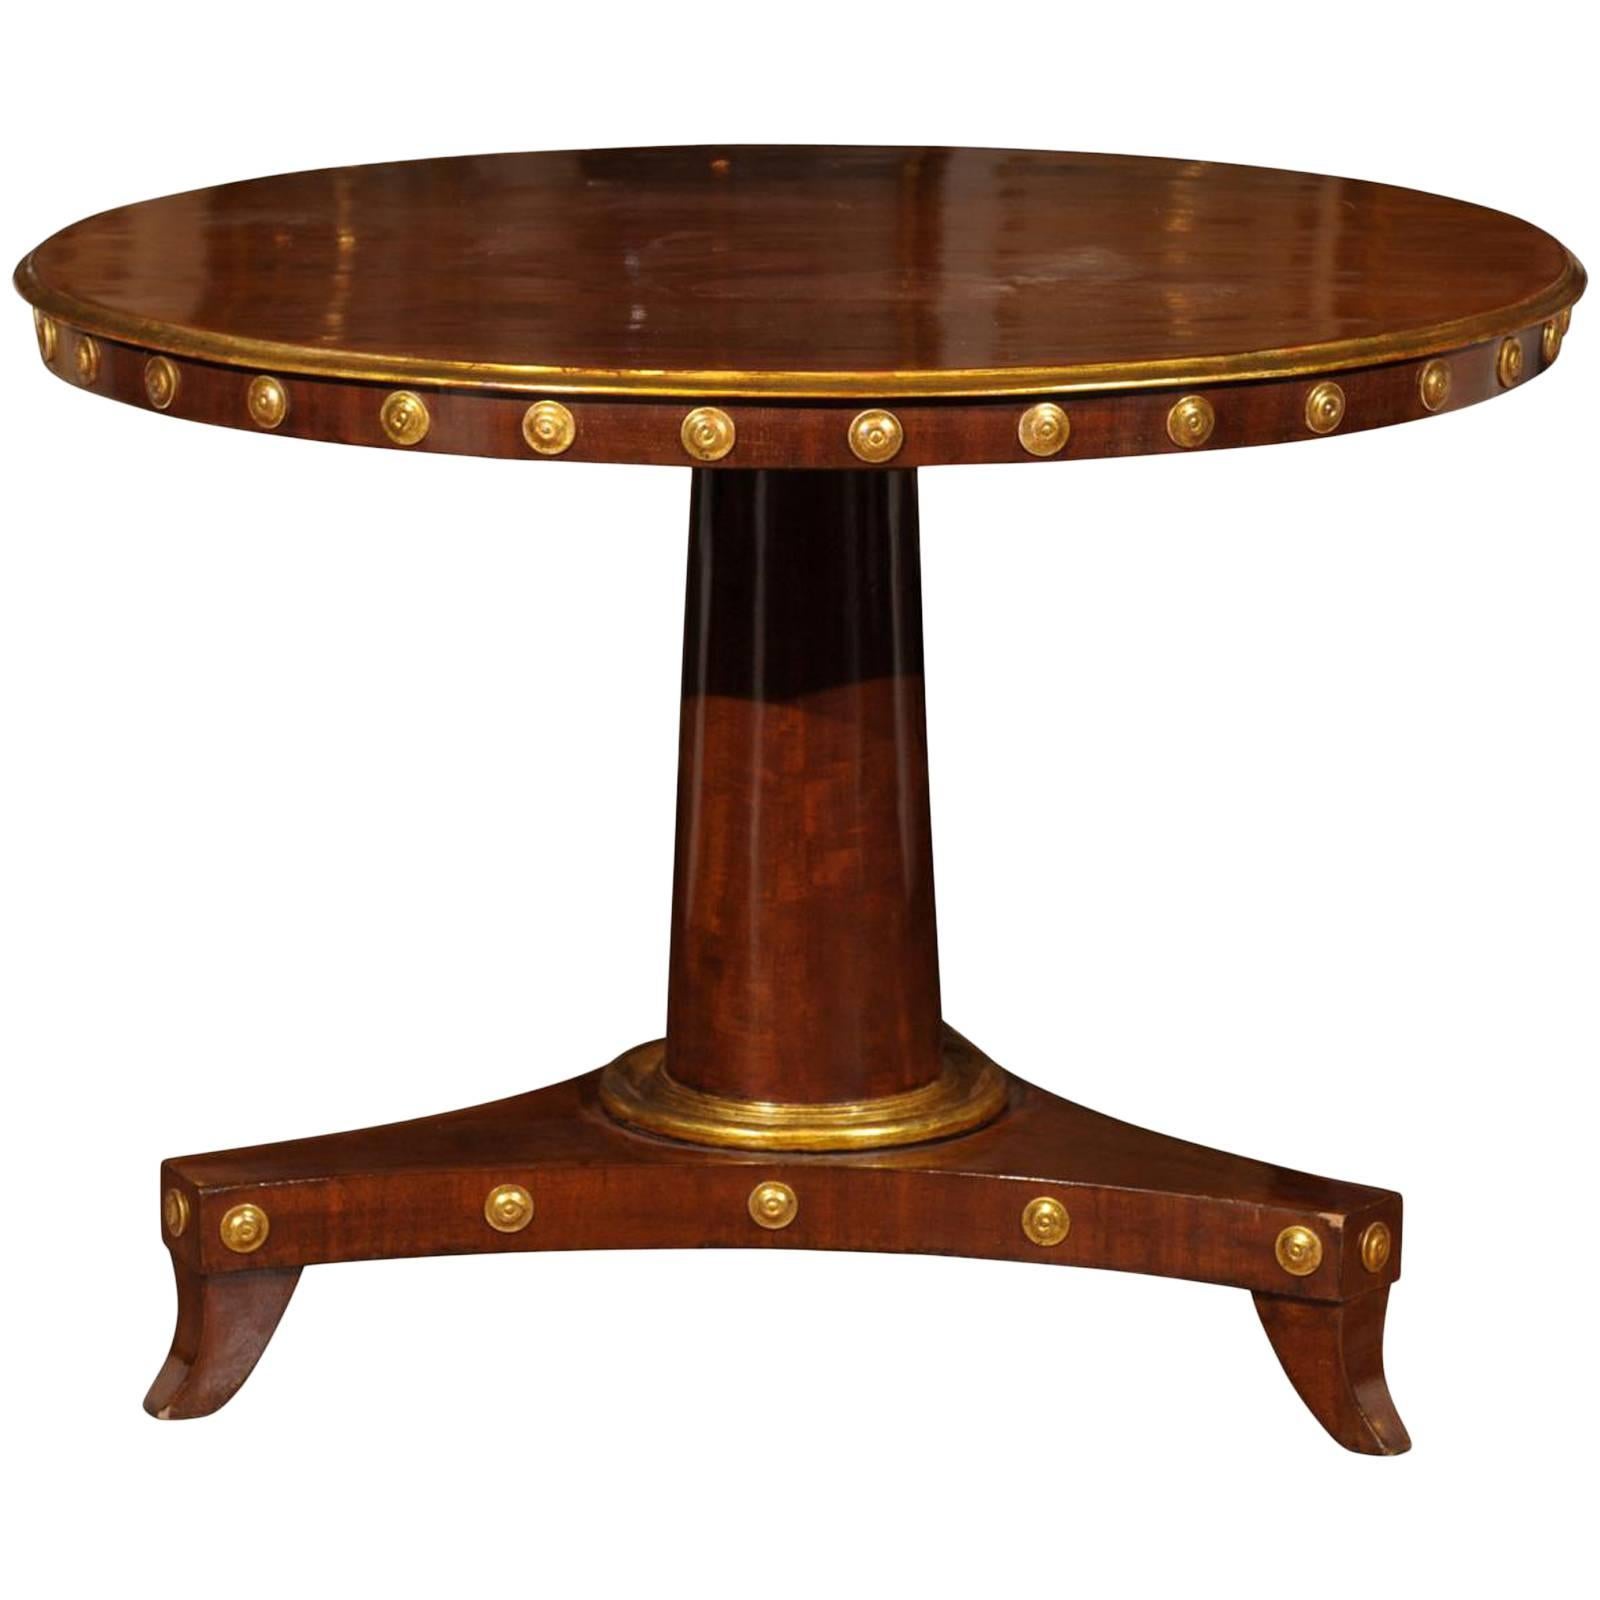 Early 19th Century Empire Period Tilt-Top Pedestal Center Table